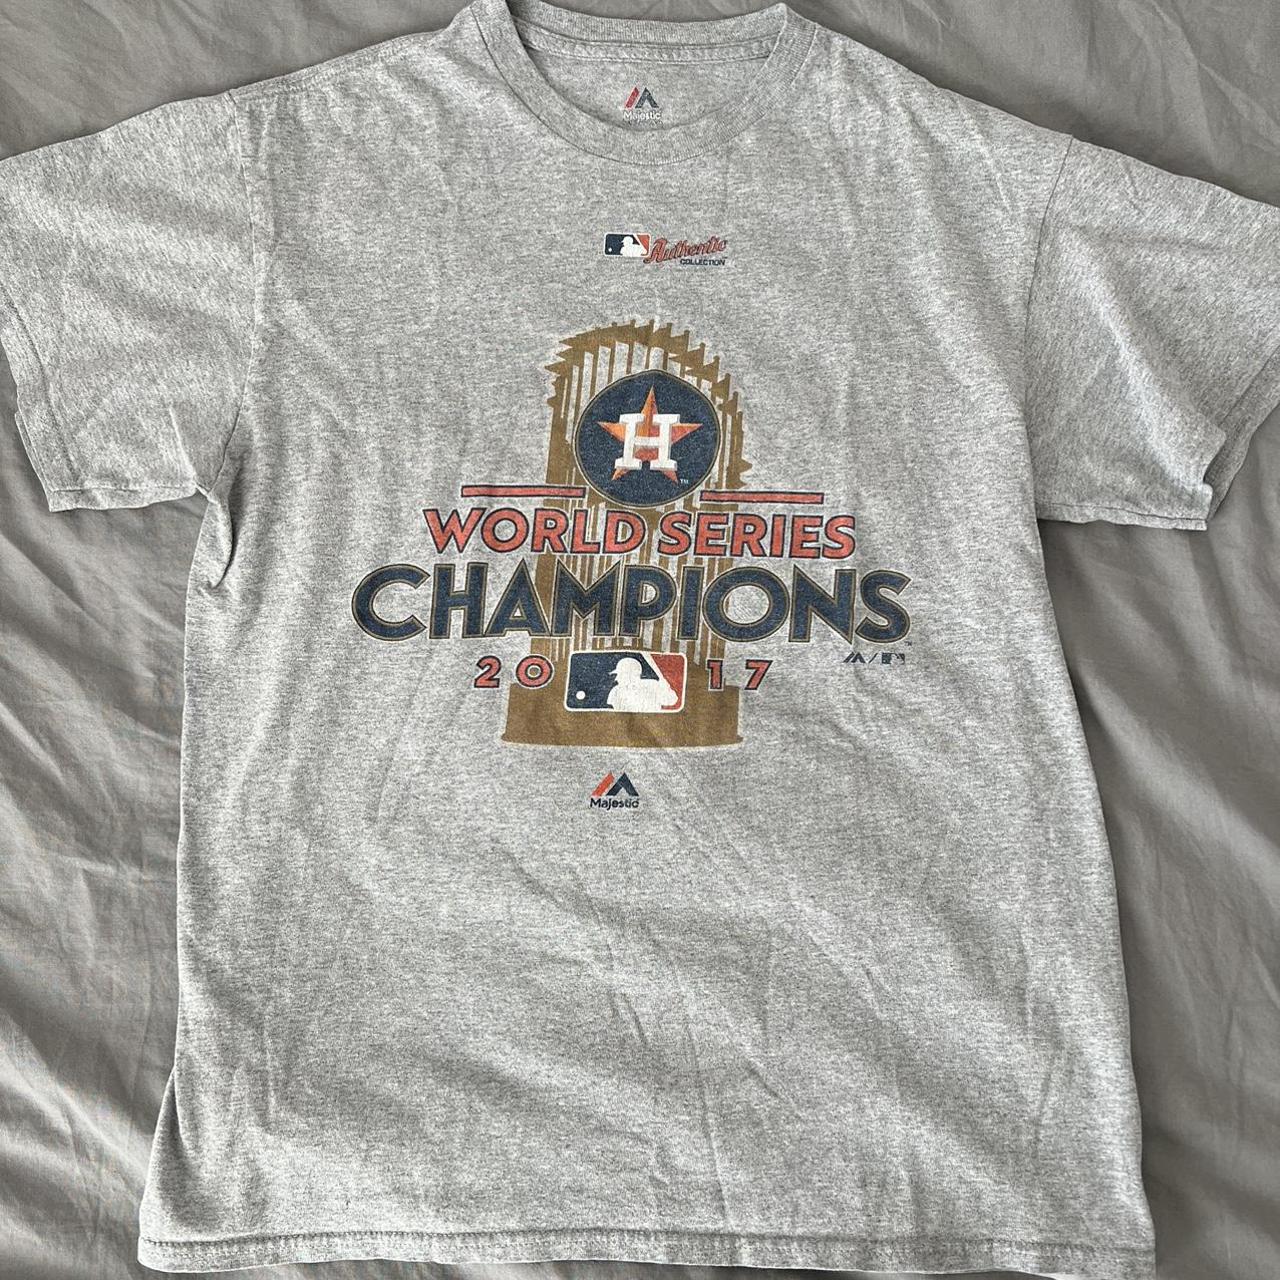 Houston Astros MLB Baseball Champ Graphic Shirt - Depop